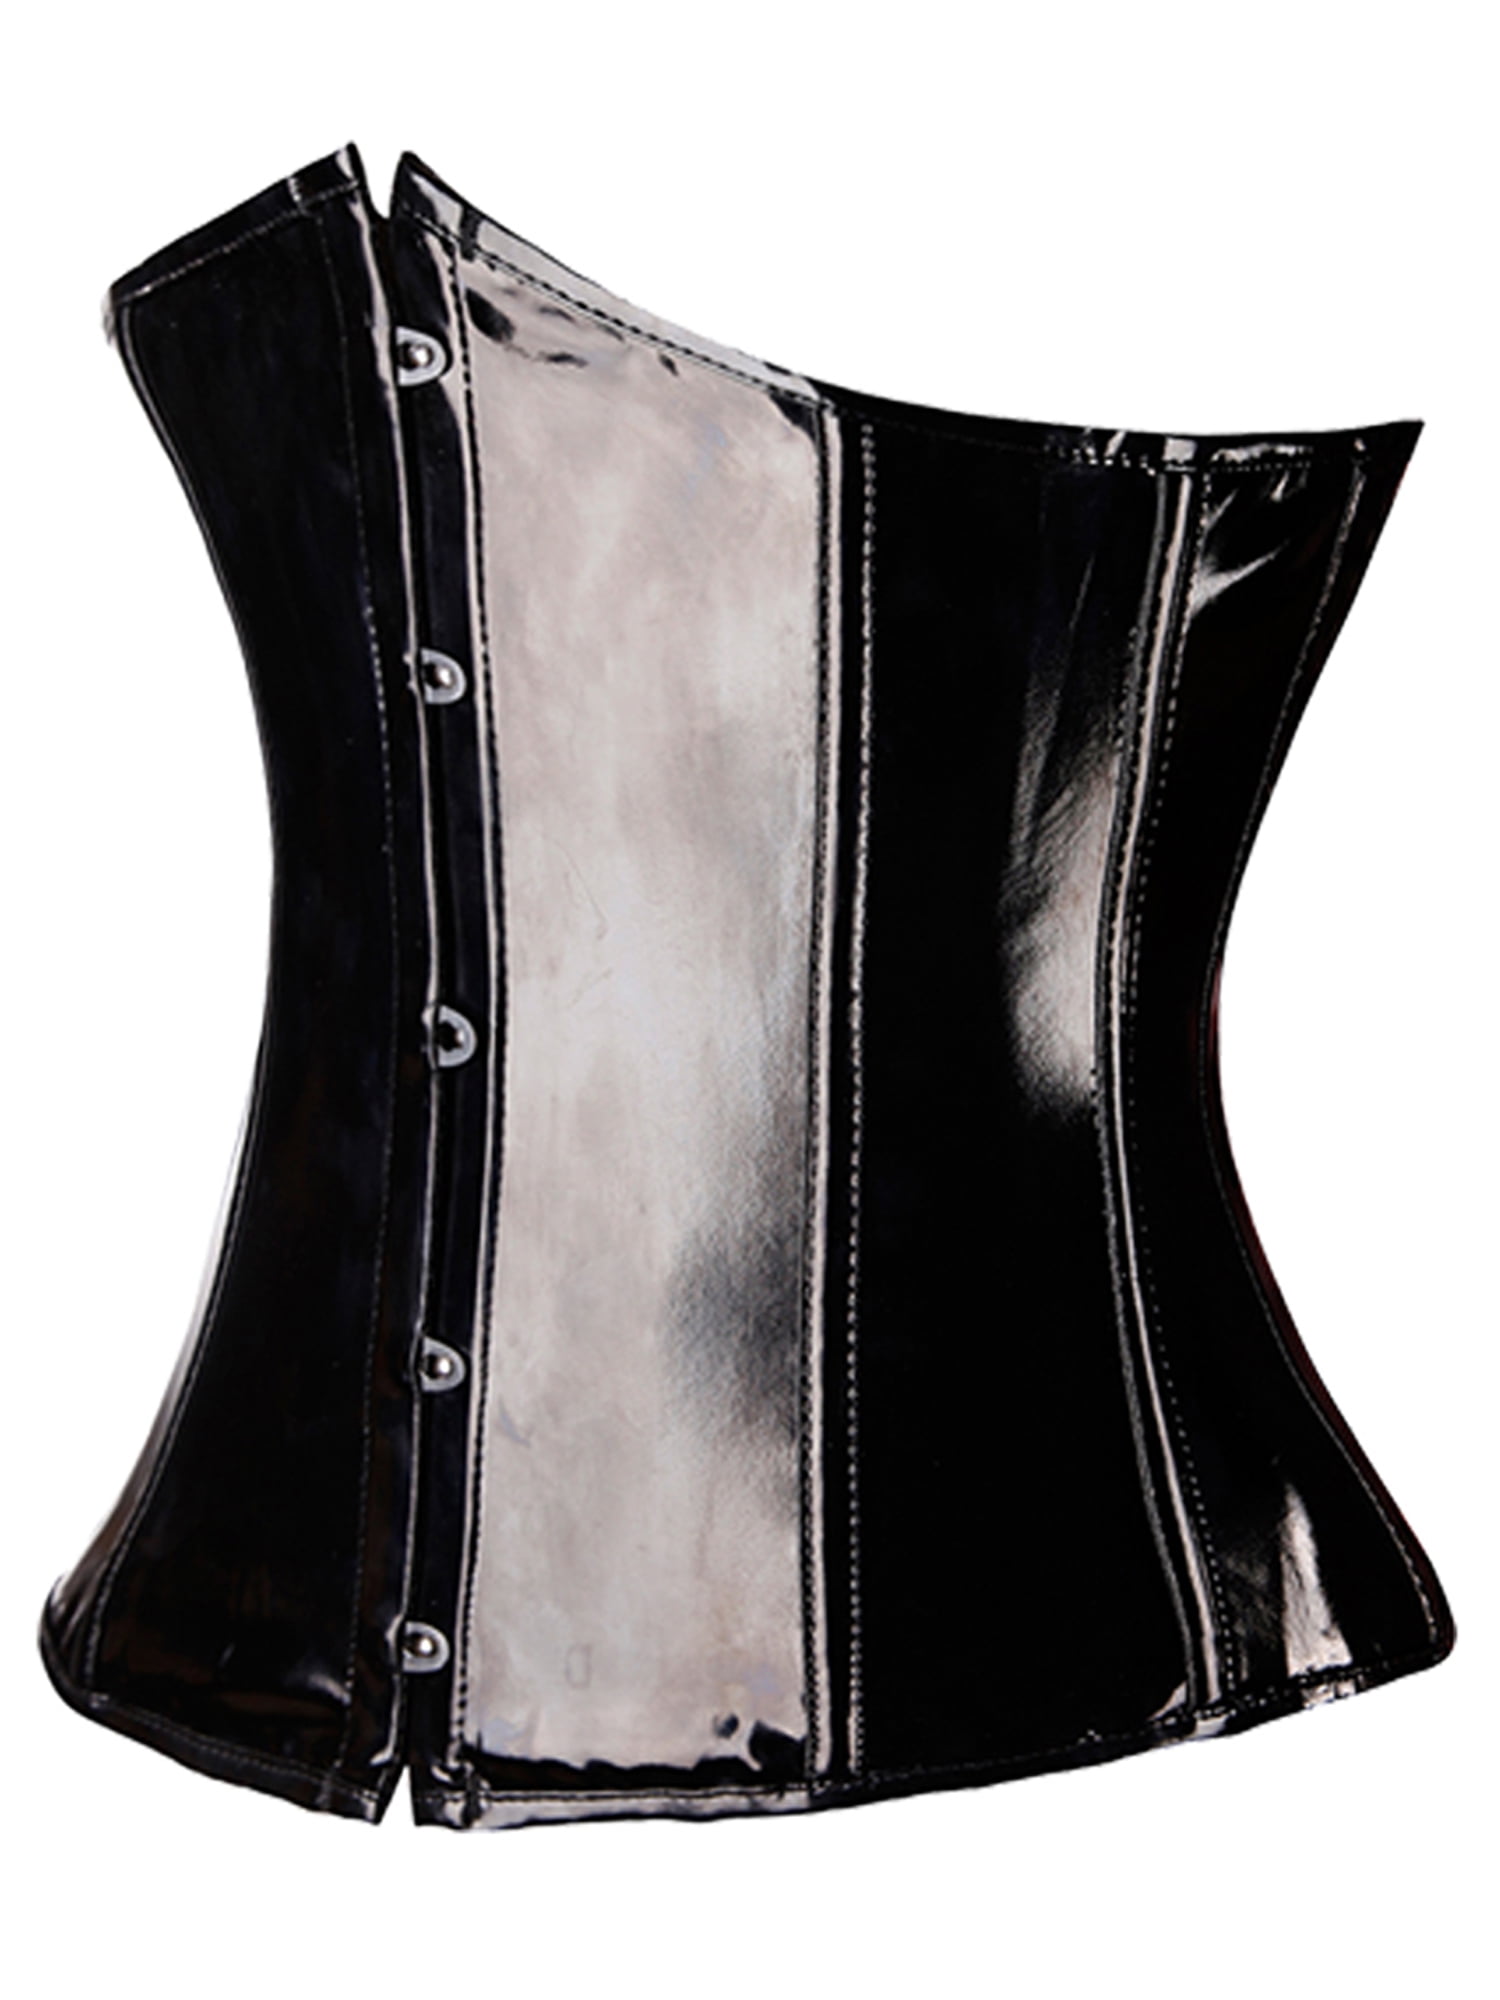 DODOING Corsets Intimates Black Faux Leather Steampunk Gothic Waist Trainer  Underbust Corset Bustier Plus Size S-6XL 